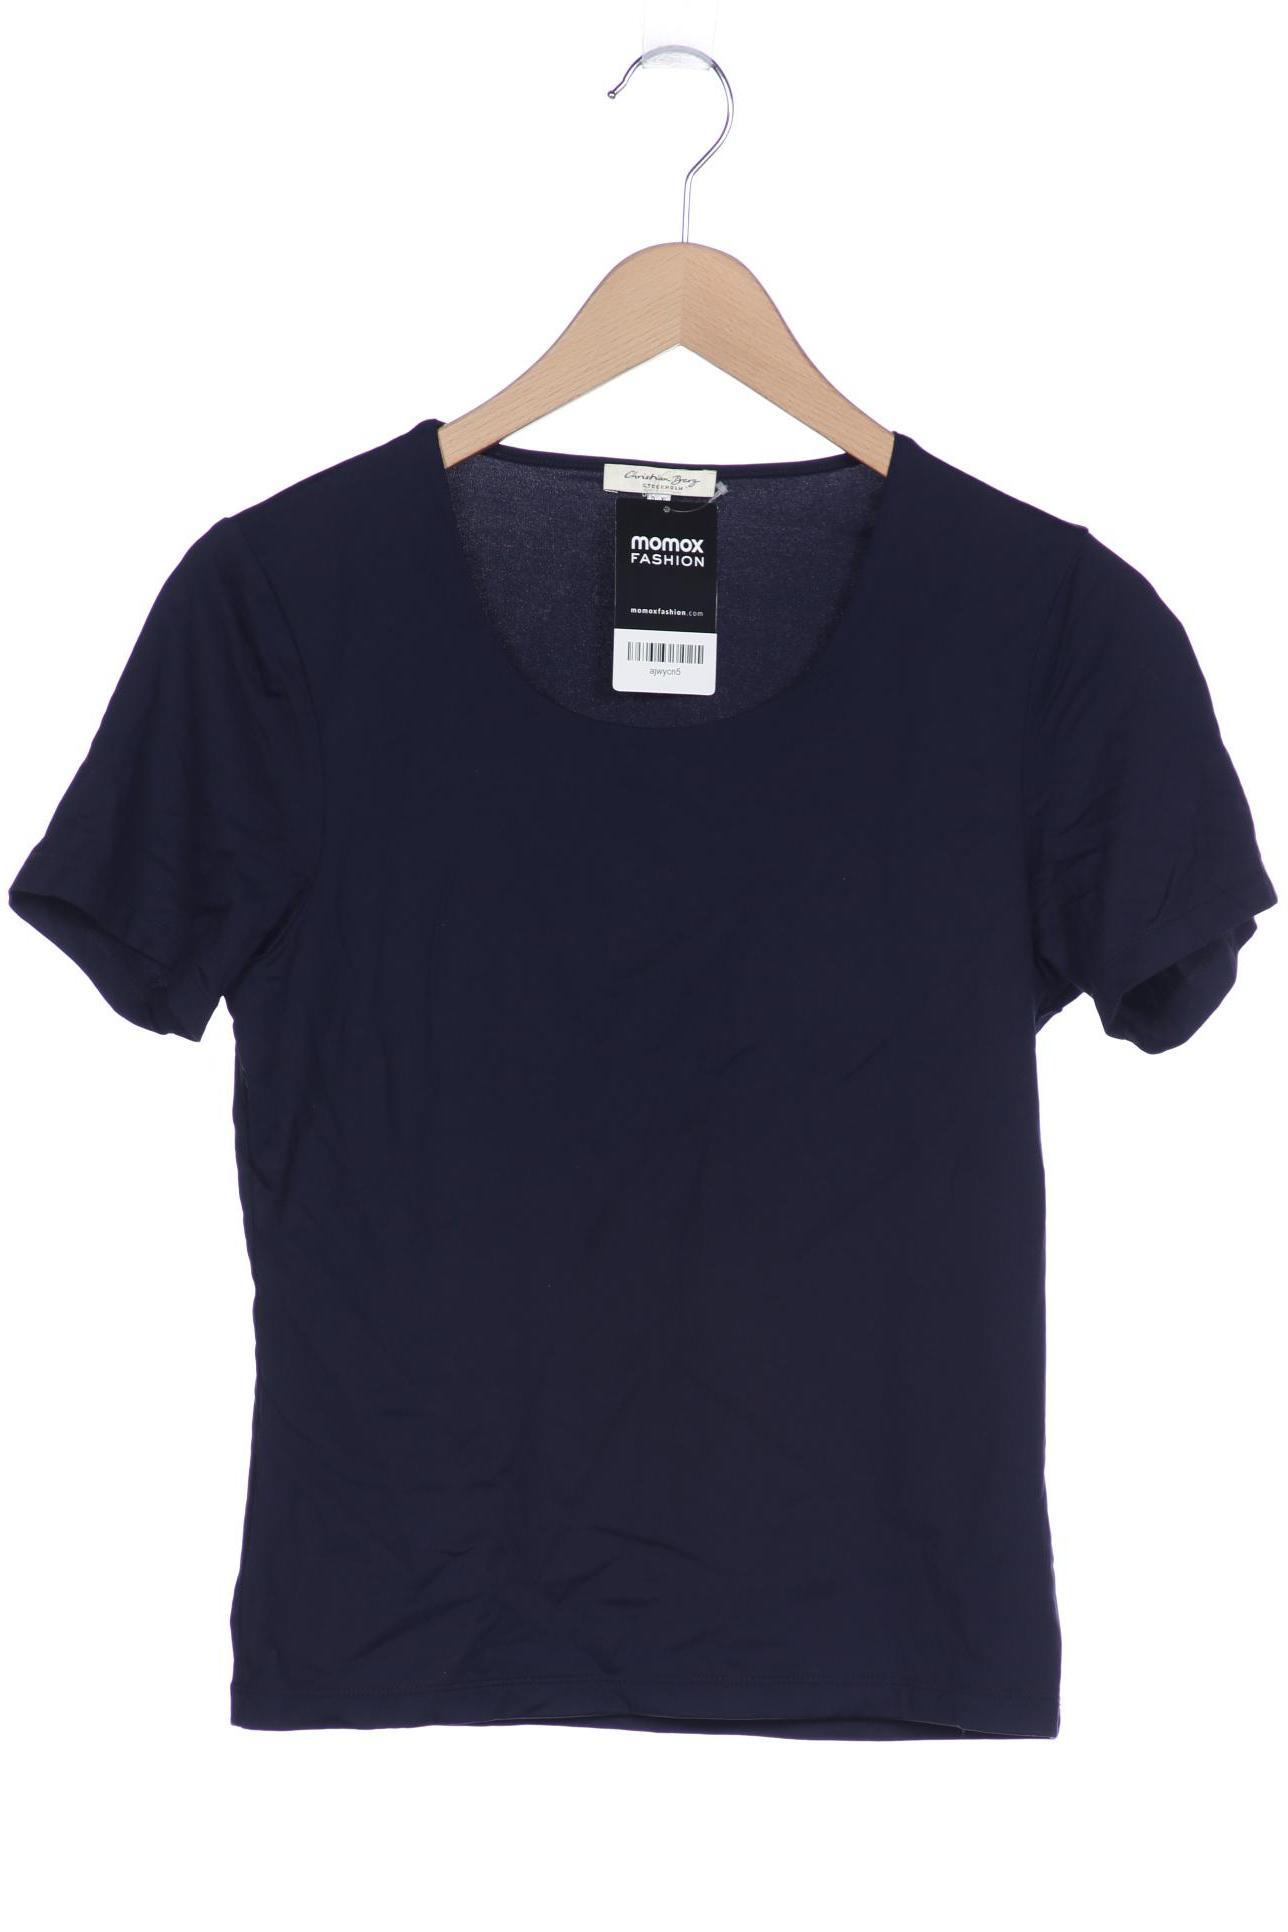 Christian Berg Damen T-Shirt, marineblau von christian berg